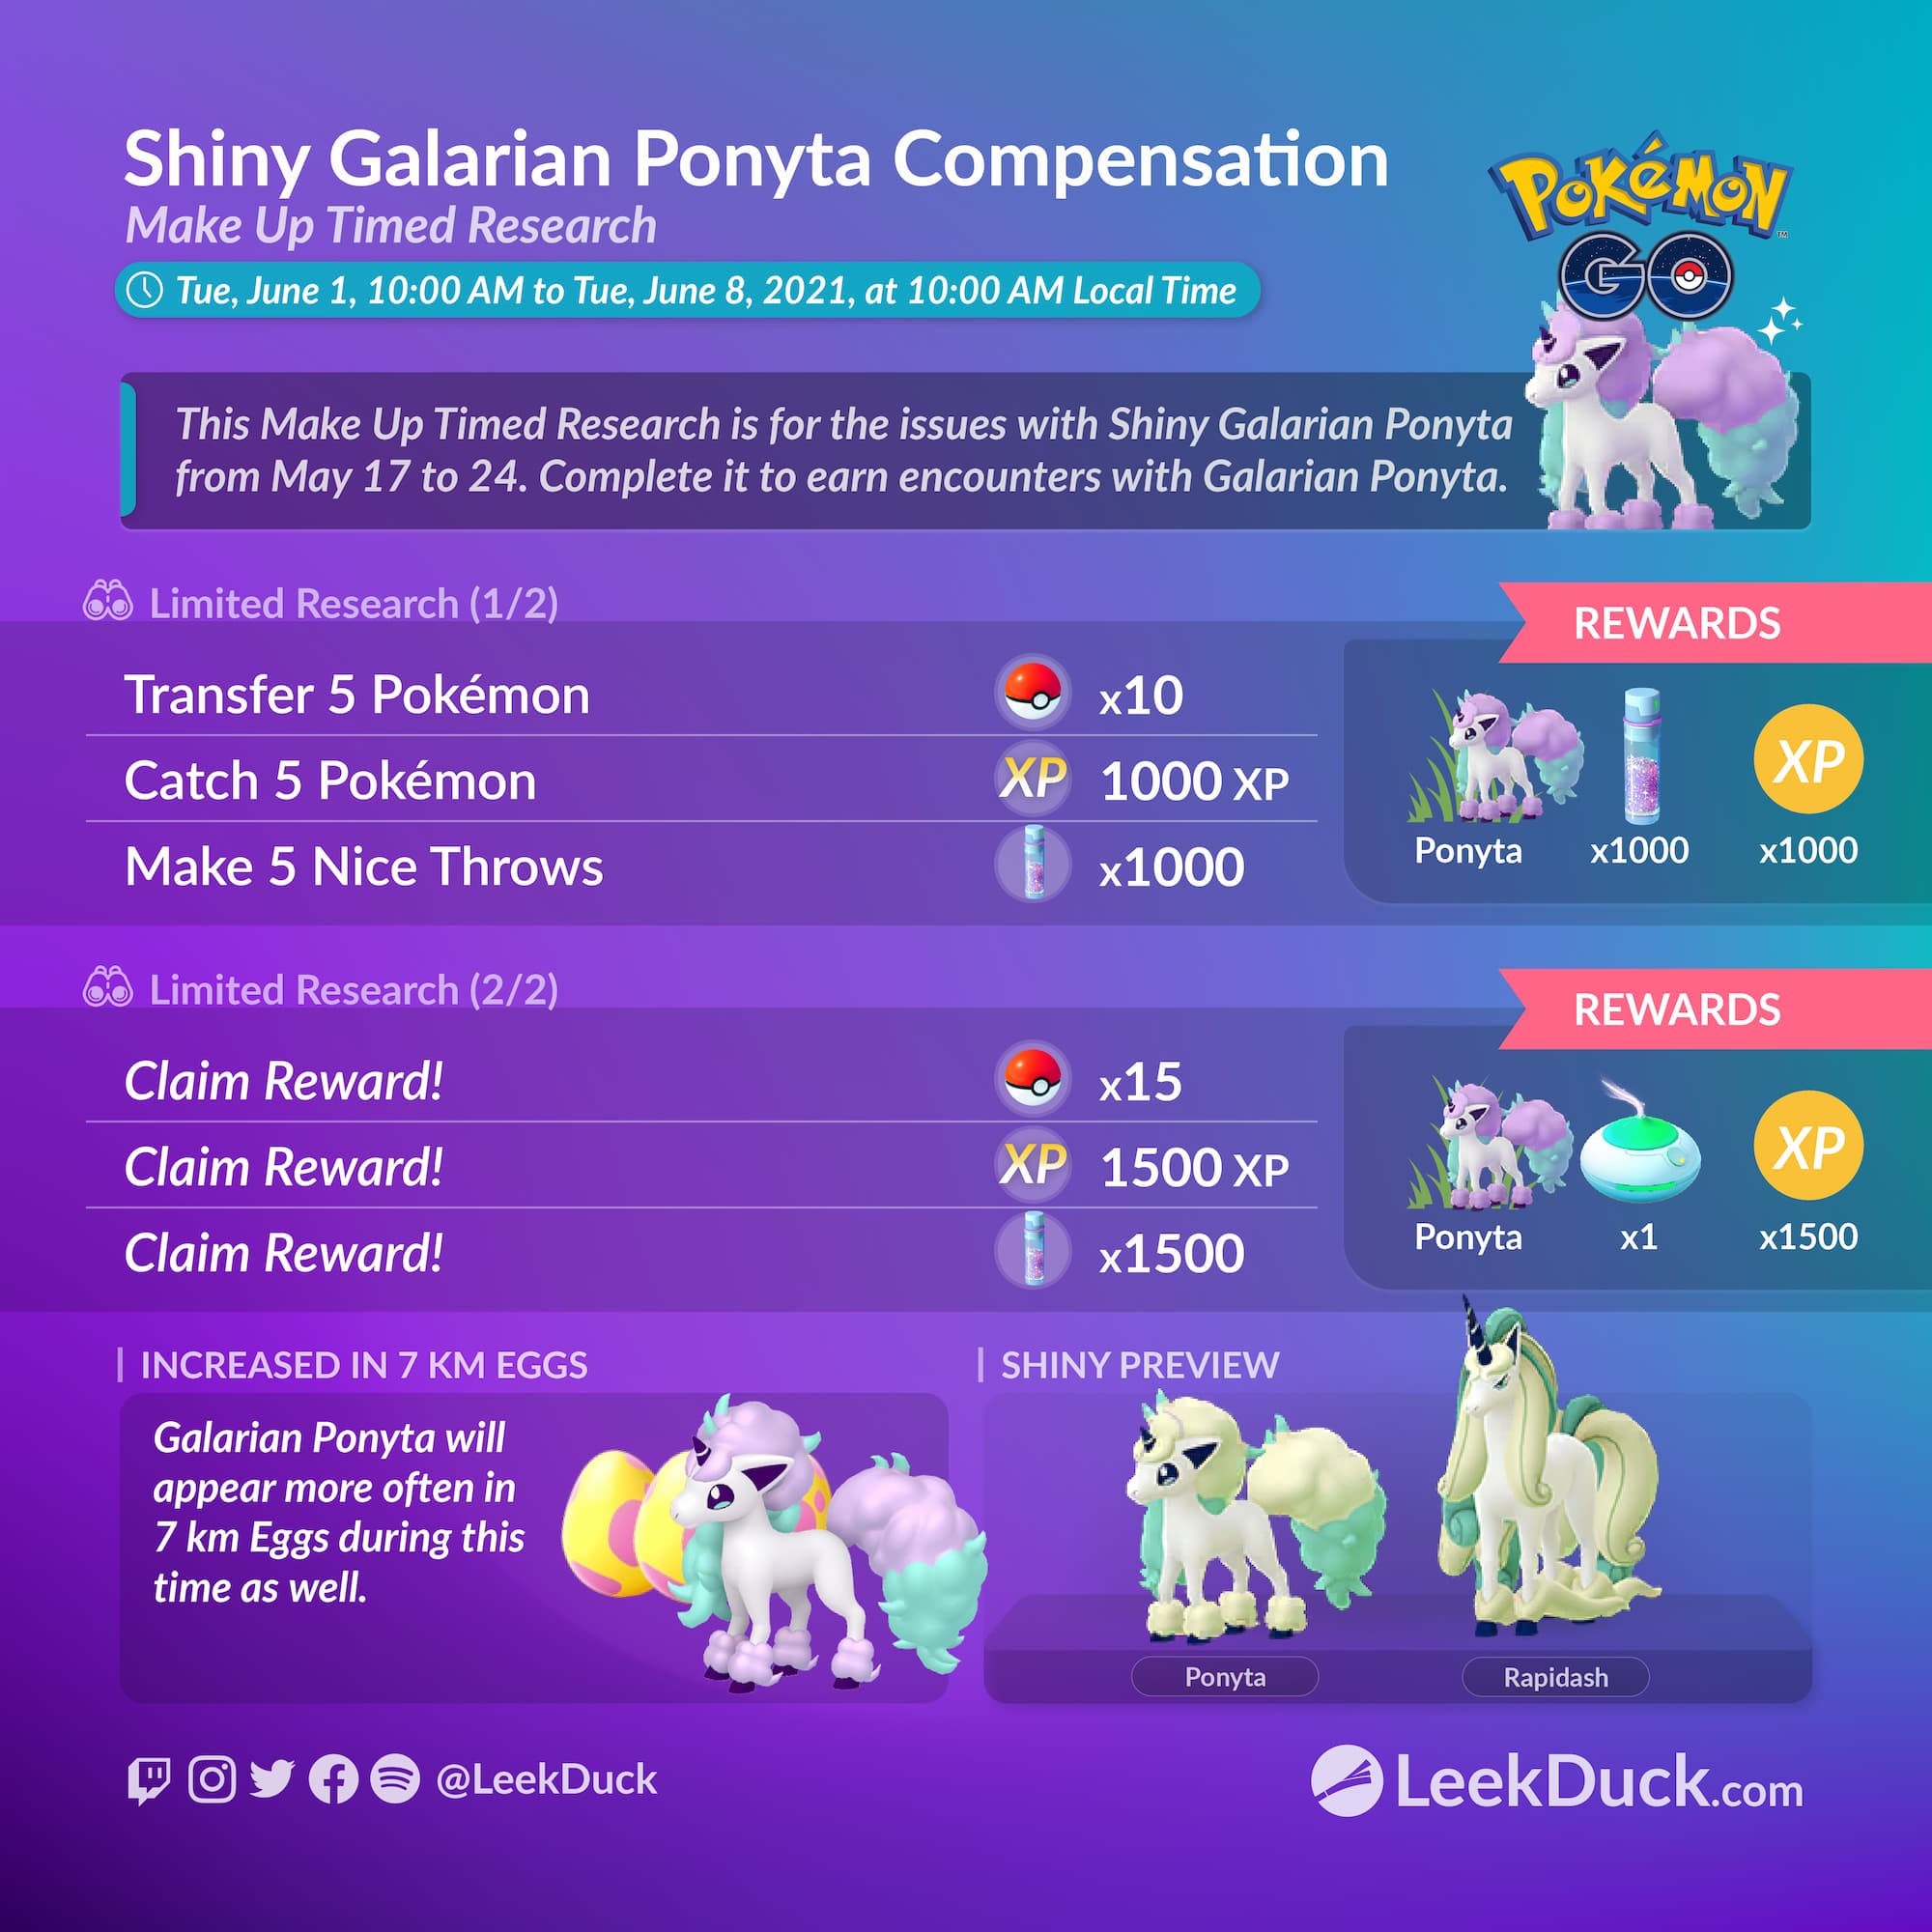 Shiny Galarian Ponyta Compensation Leek Duck Pokemon Go News And Resources